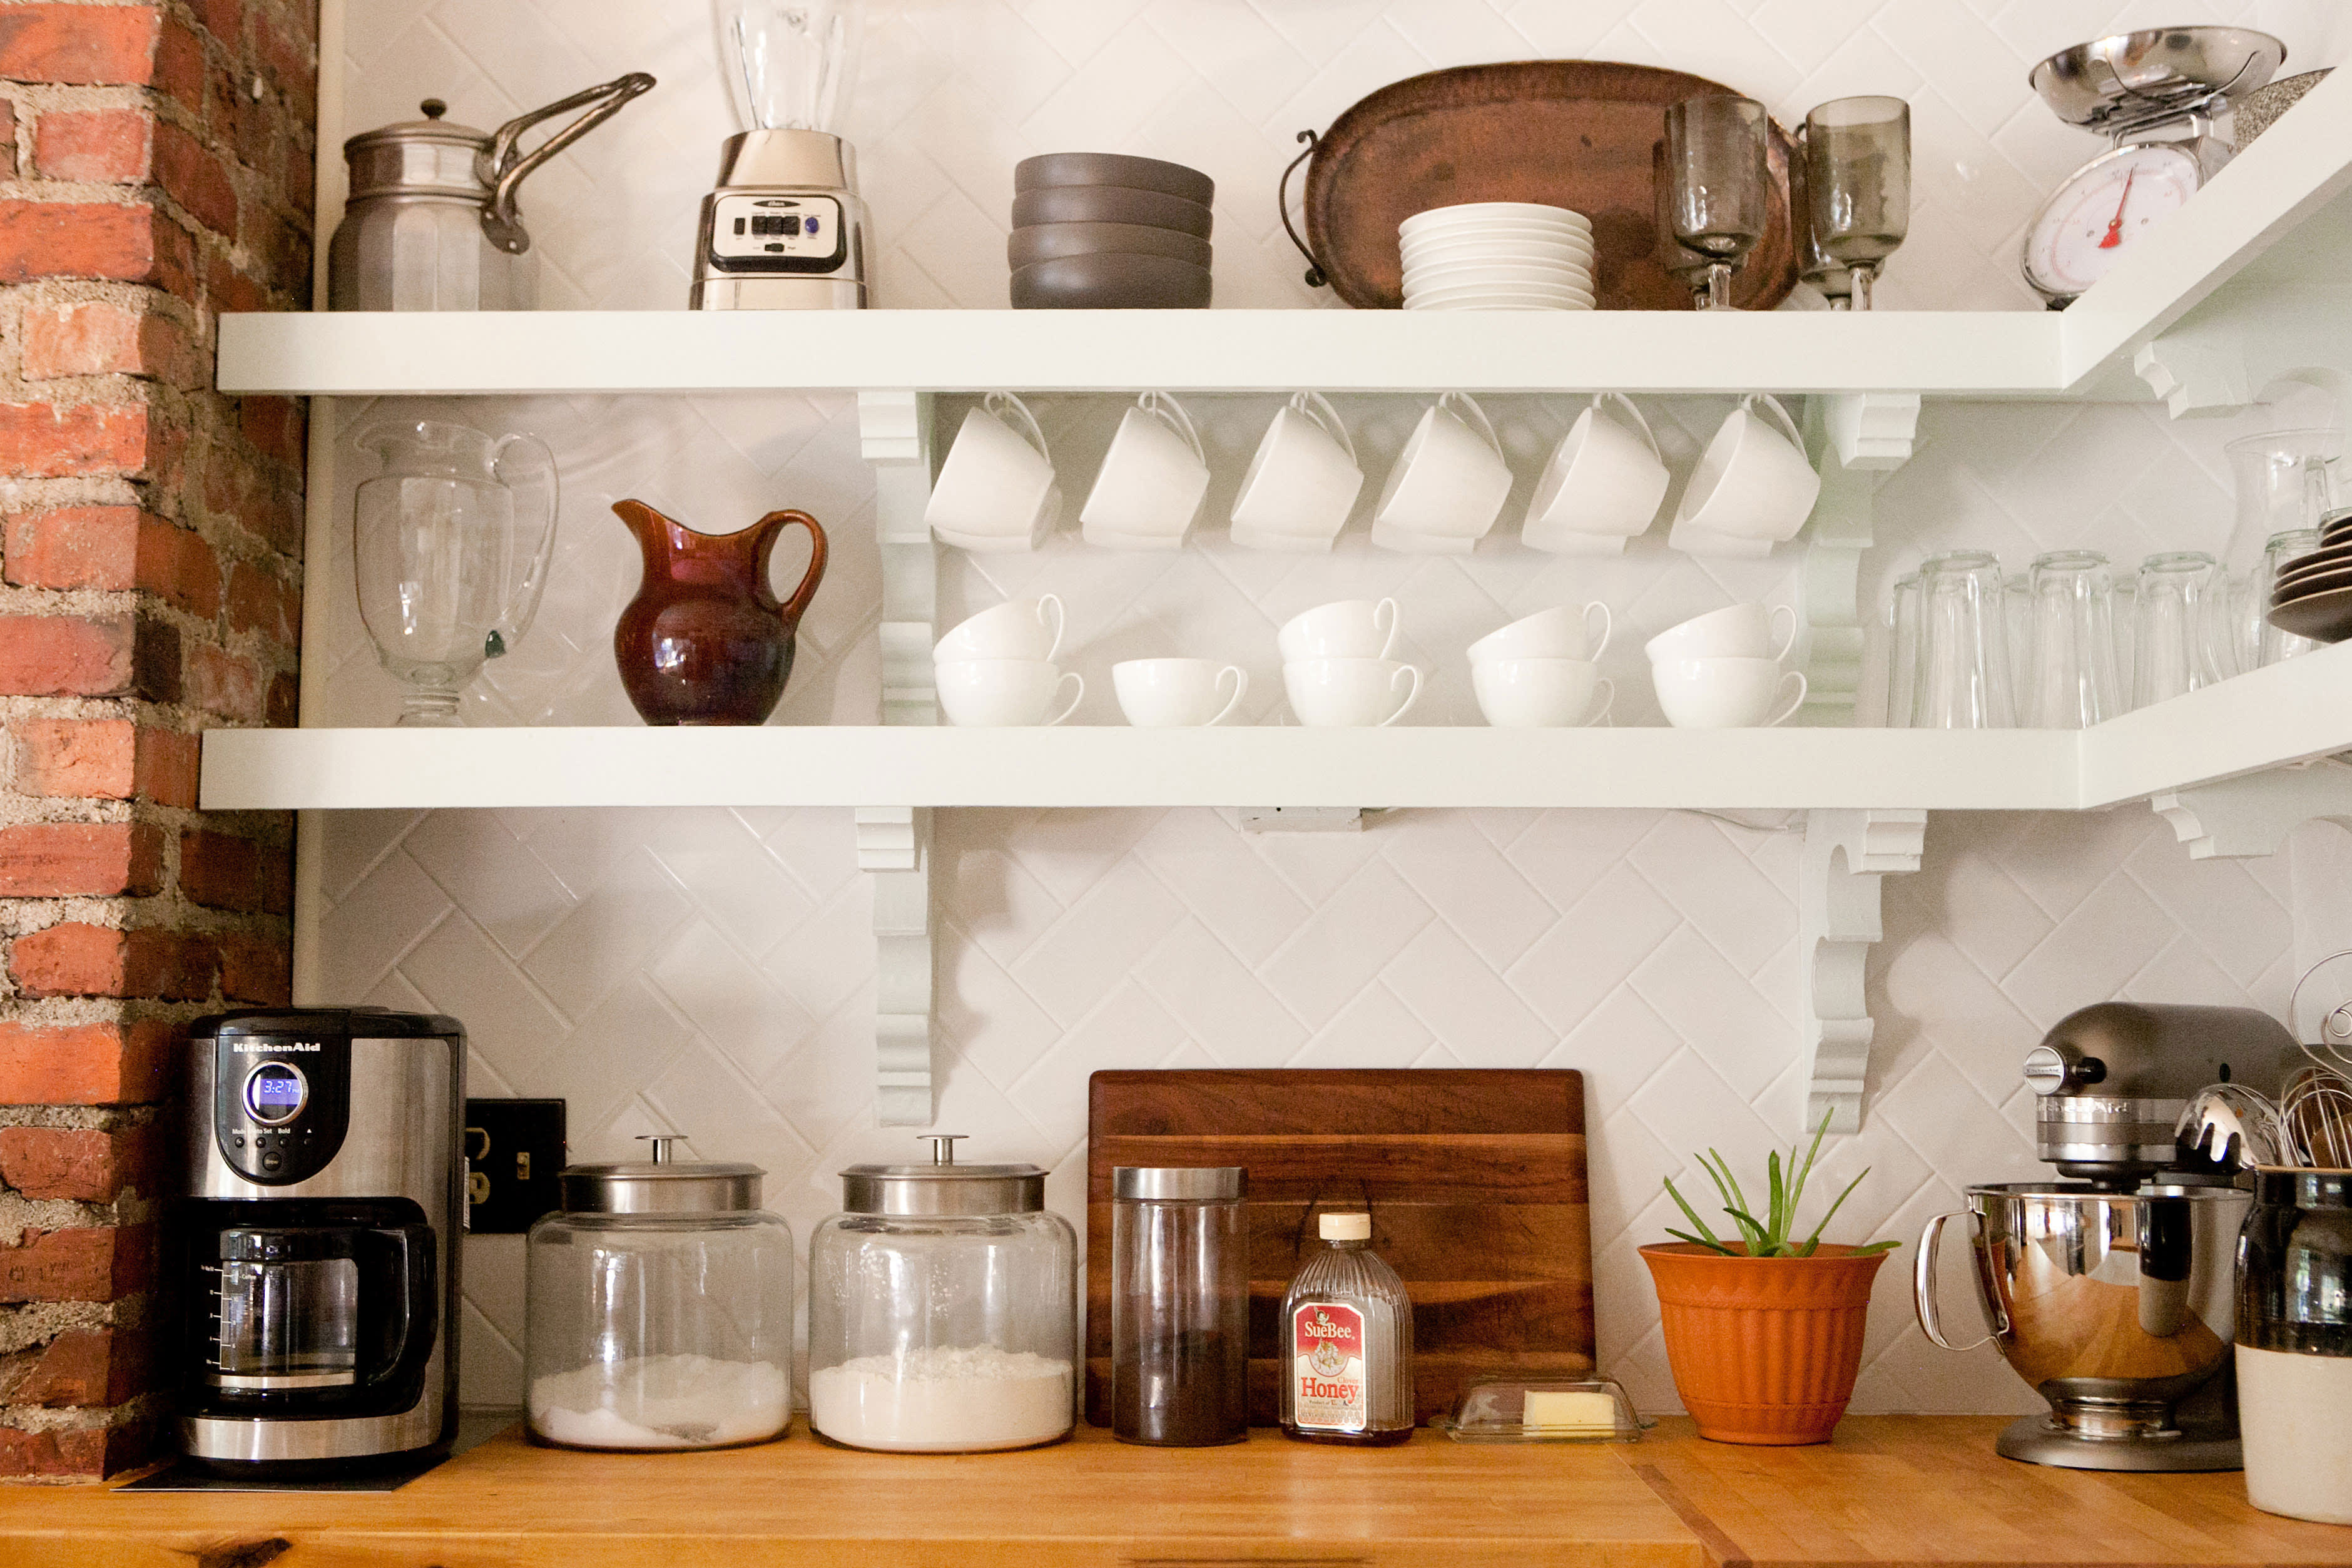 Kitchenaid stand mixer Archives - Interior Design Inspiration